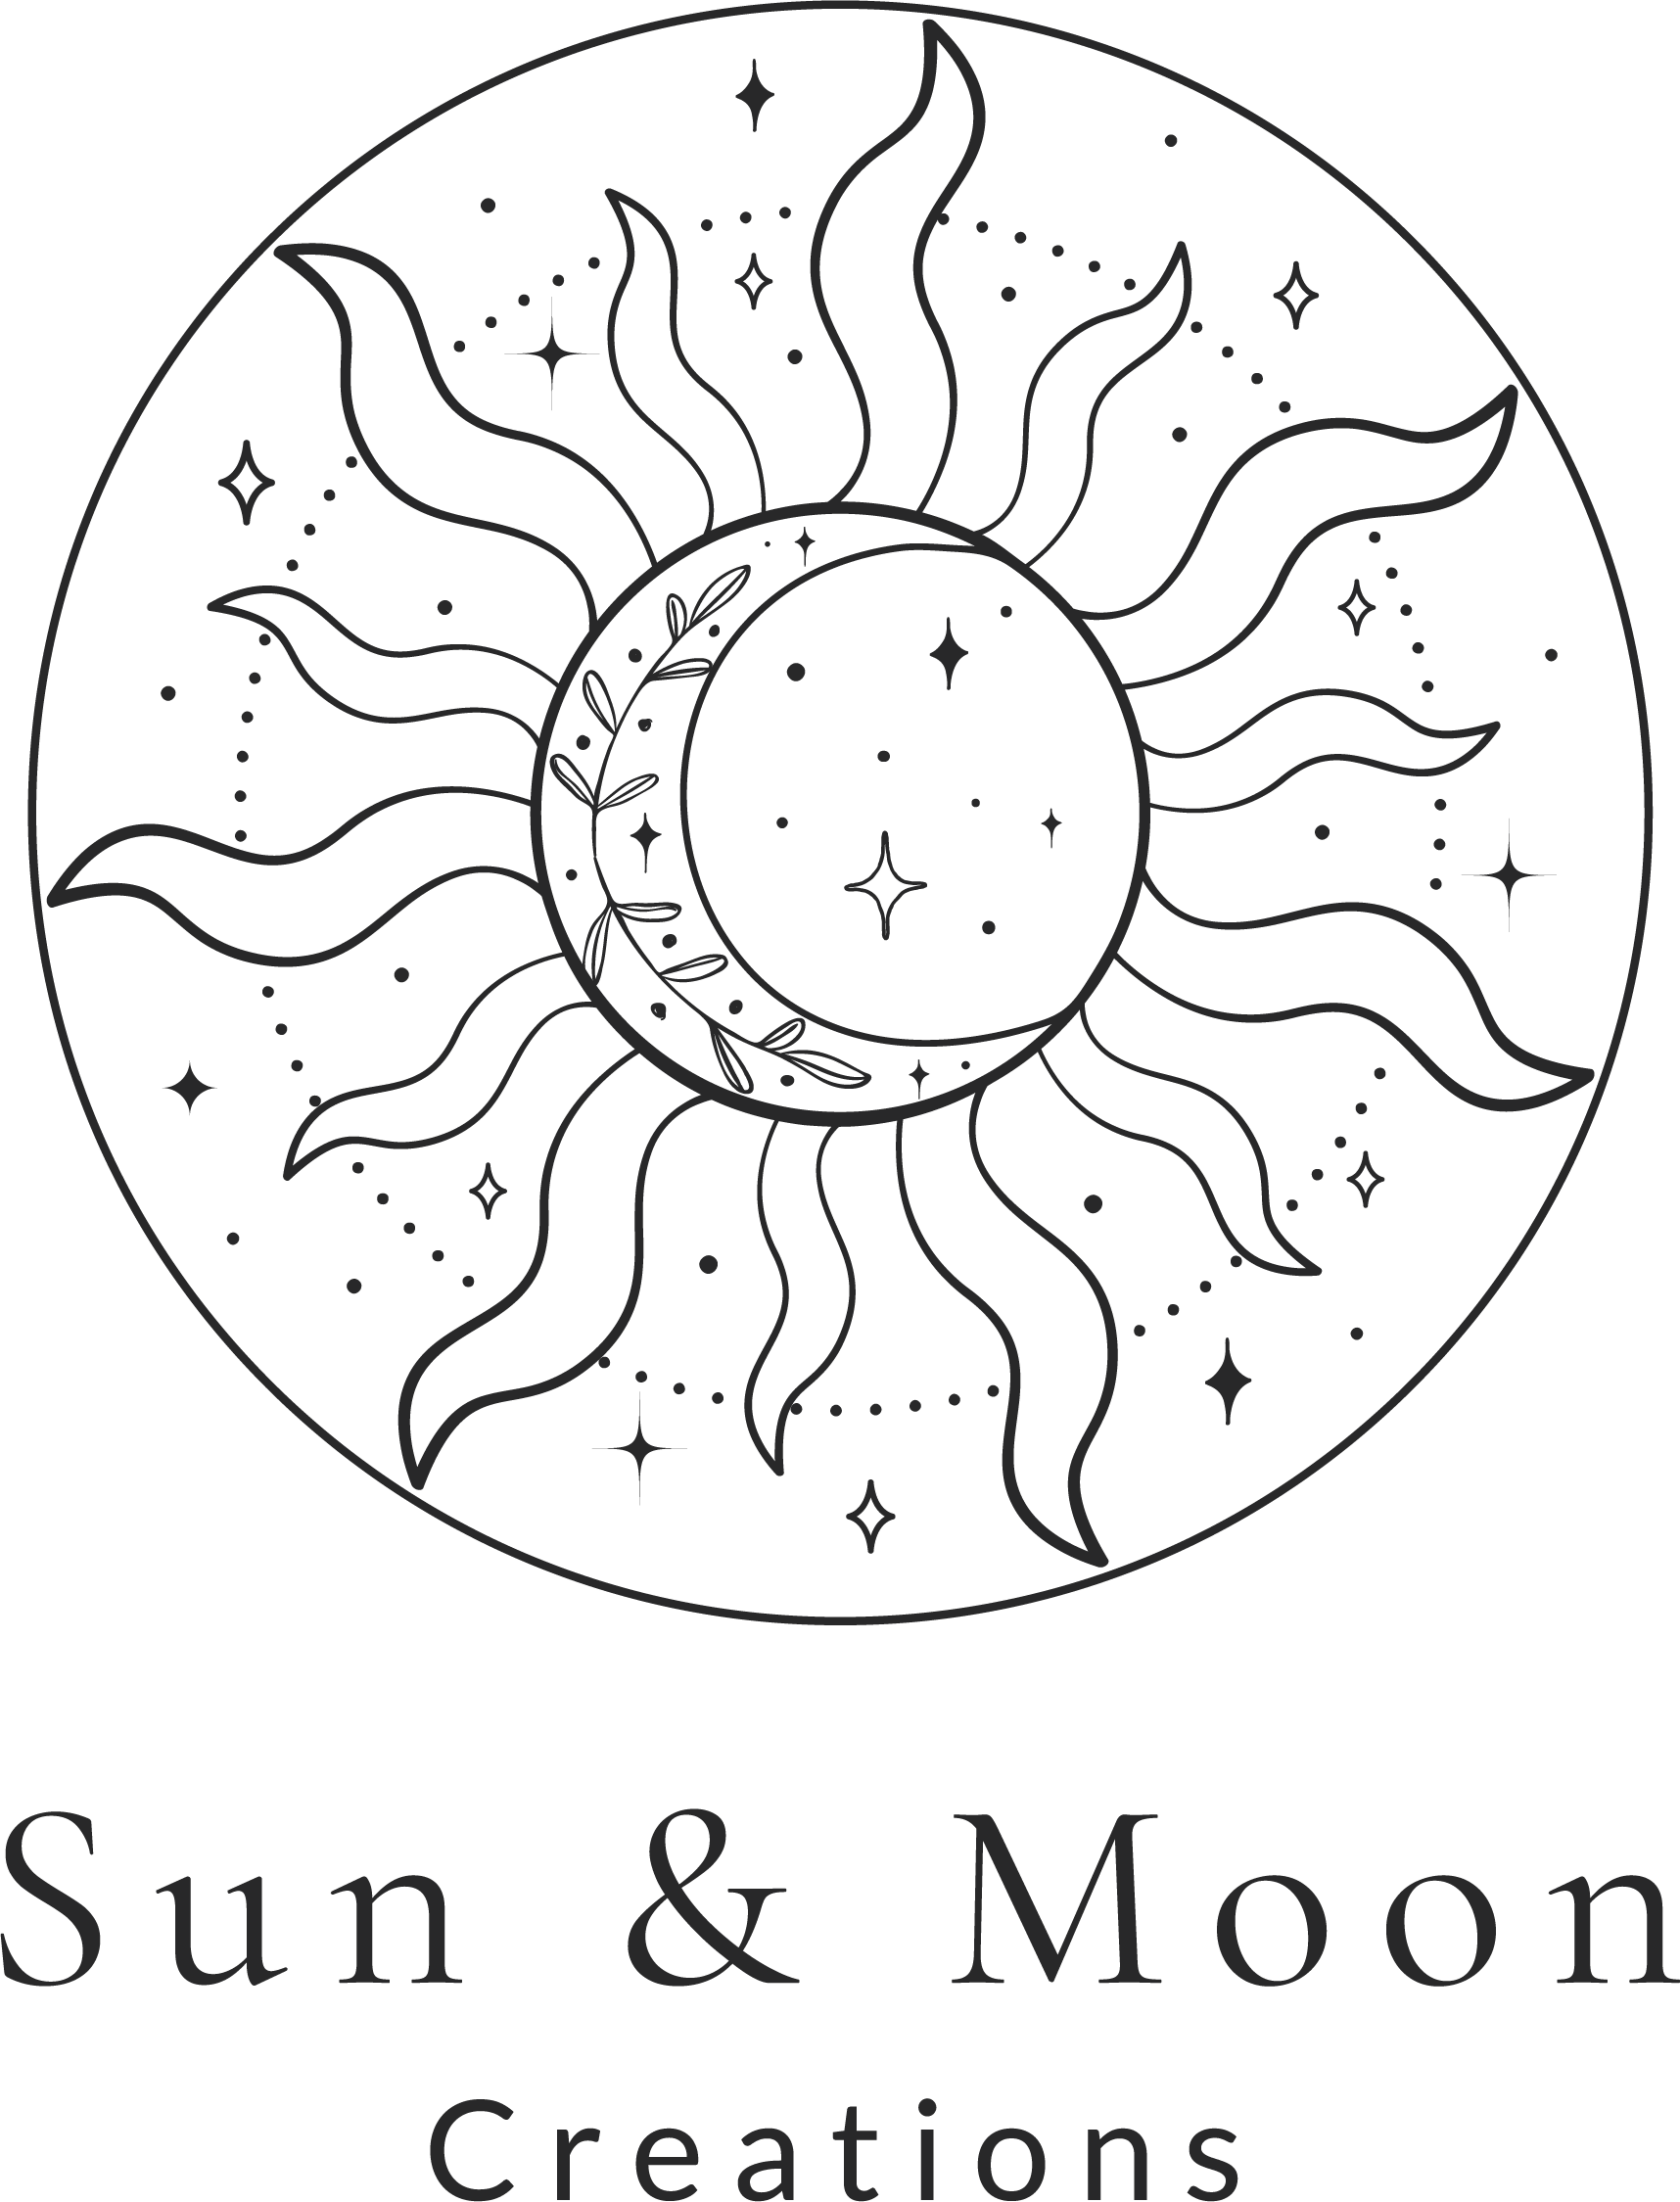 Sun&Moon Creations